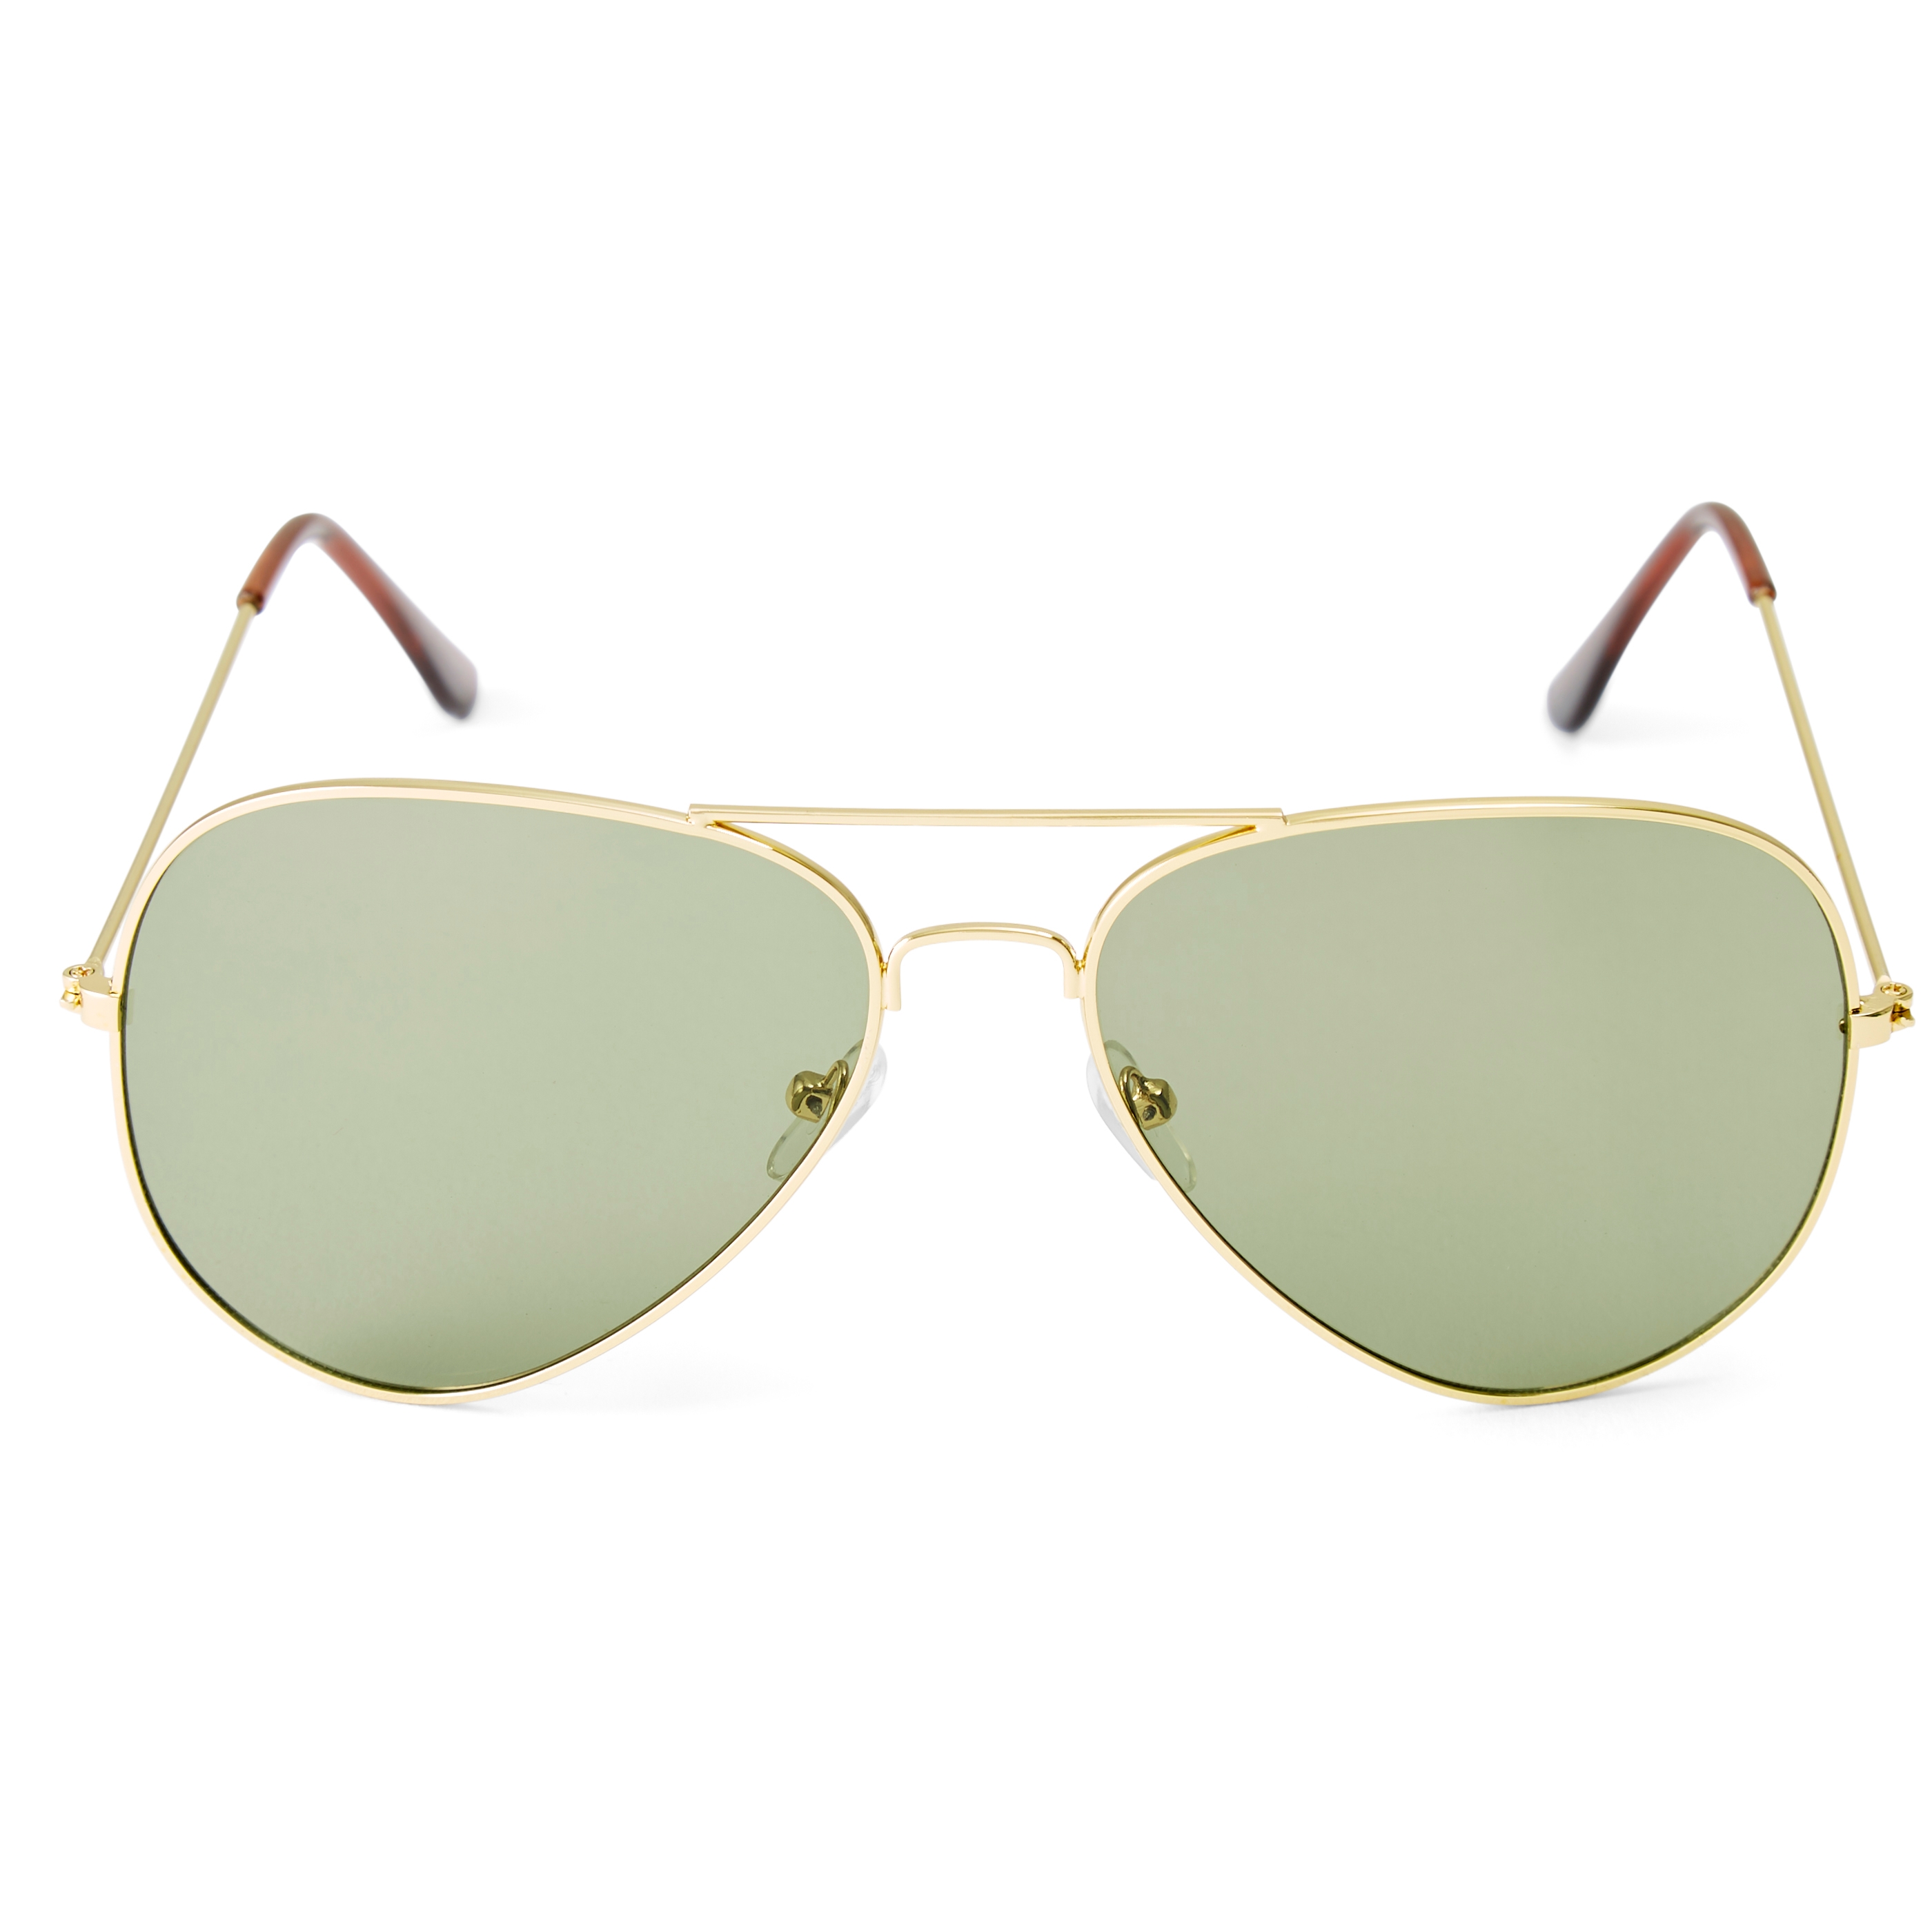 Buy Vast® Antiglare Zero Power TR90 Spectacle Frames Sunglasses For Boys,  Men, Women, Girls (computer glasses)… MADE IN INDIA at Amazon.in